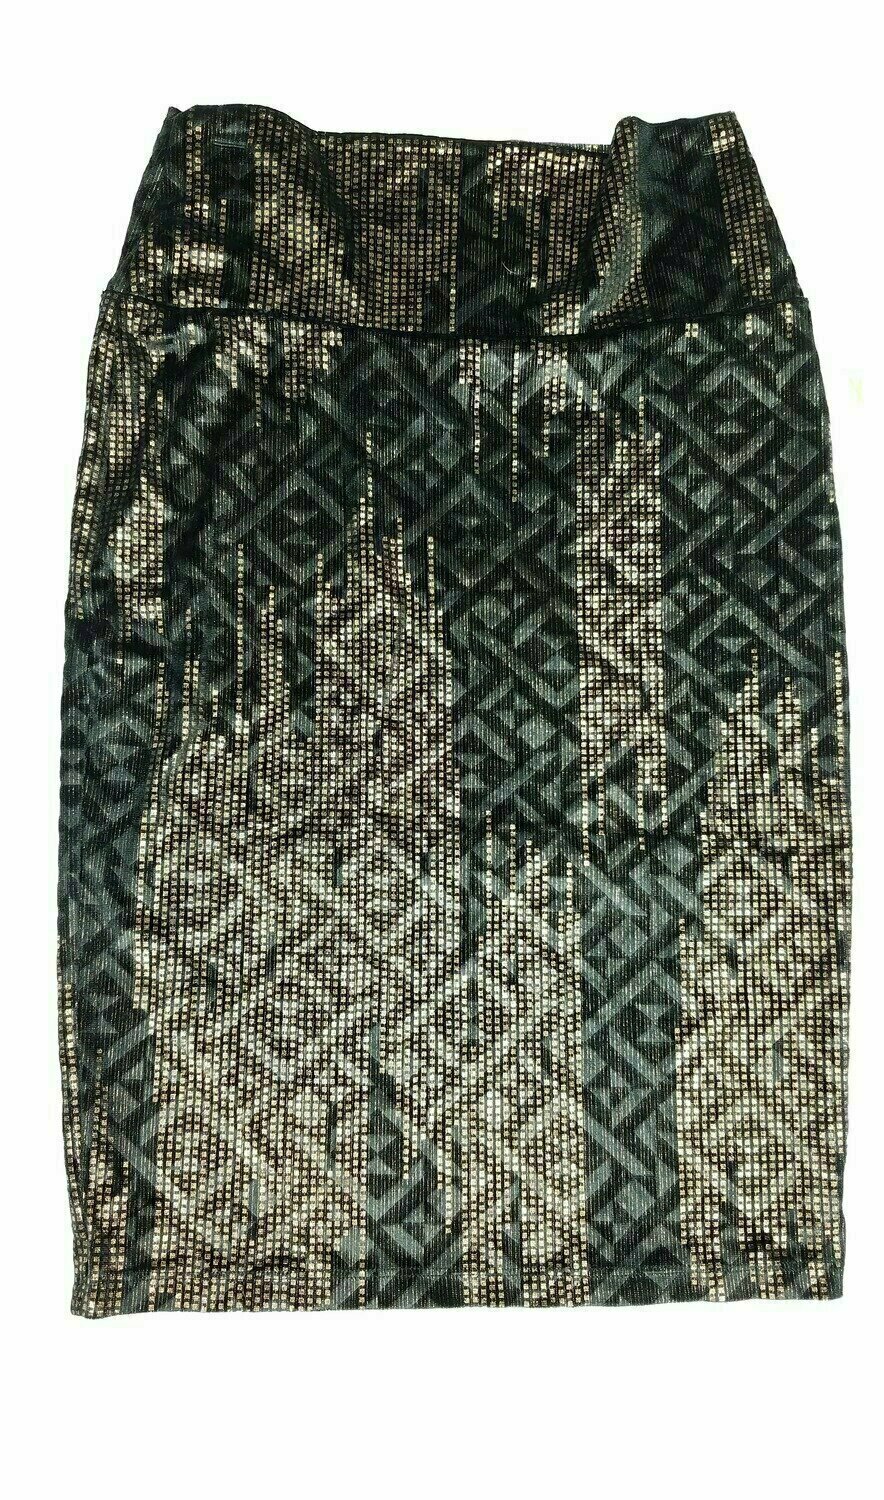 LuLaRoe Cassie b X-Small (XS) Elegant collection Geometric Black Gold Silver Womens Knee Length Pencil Skirt fits sizes 2-4  XS-57